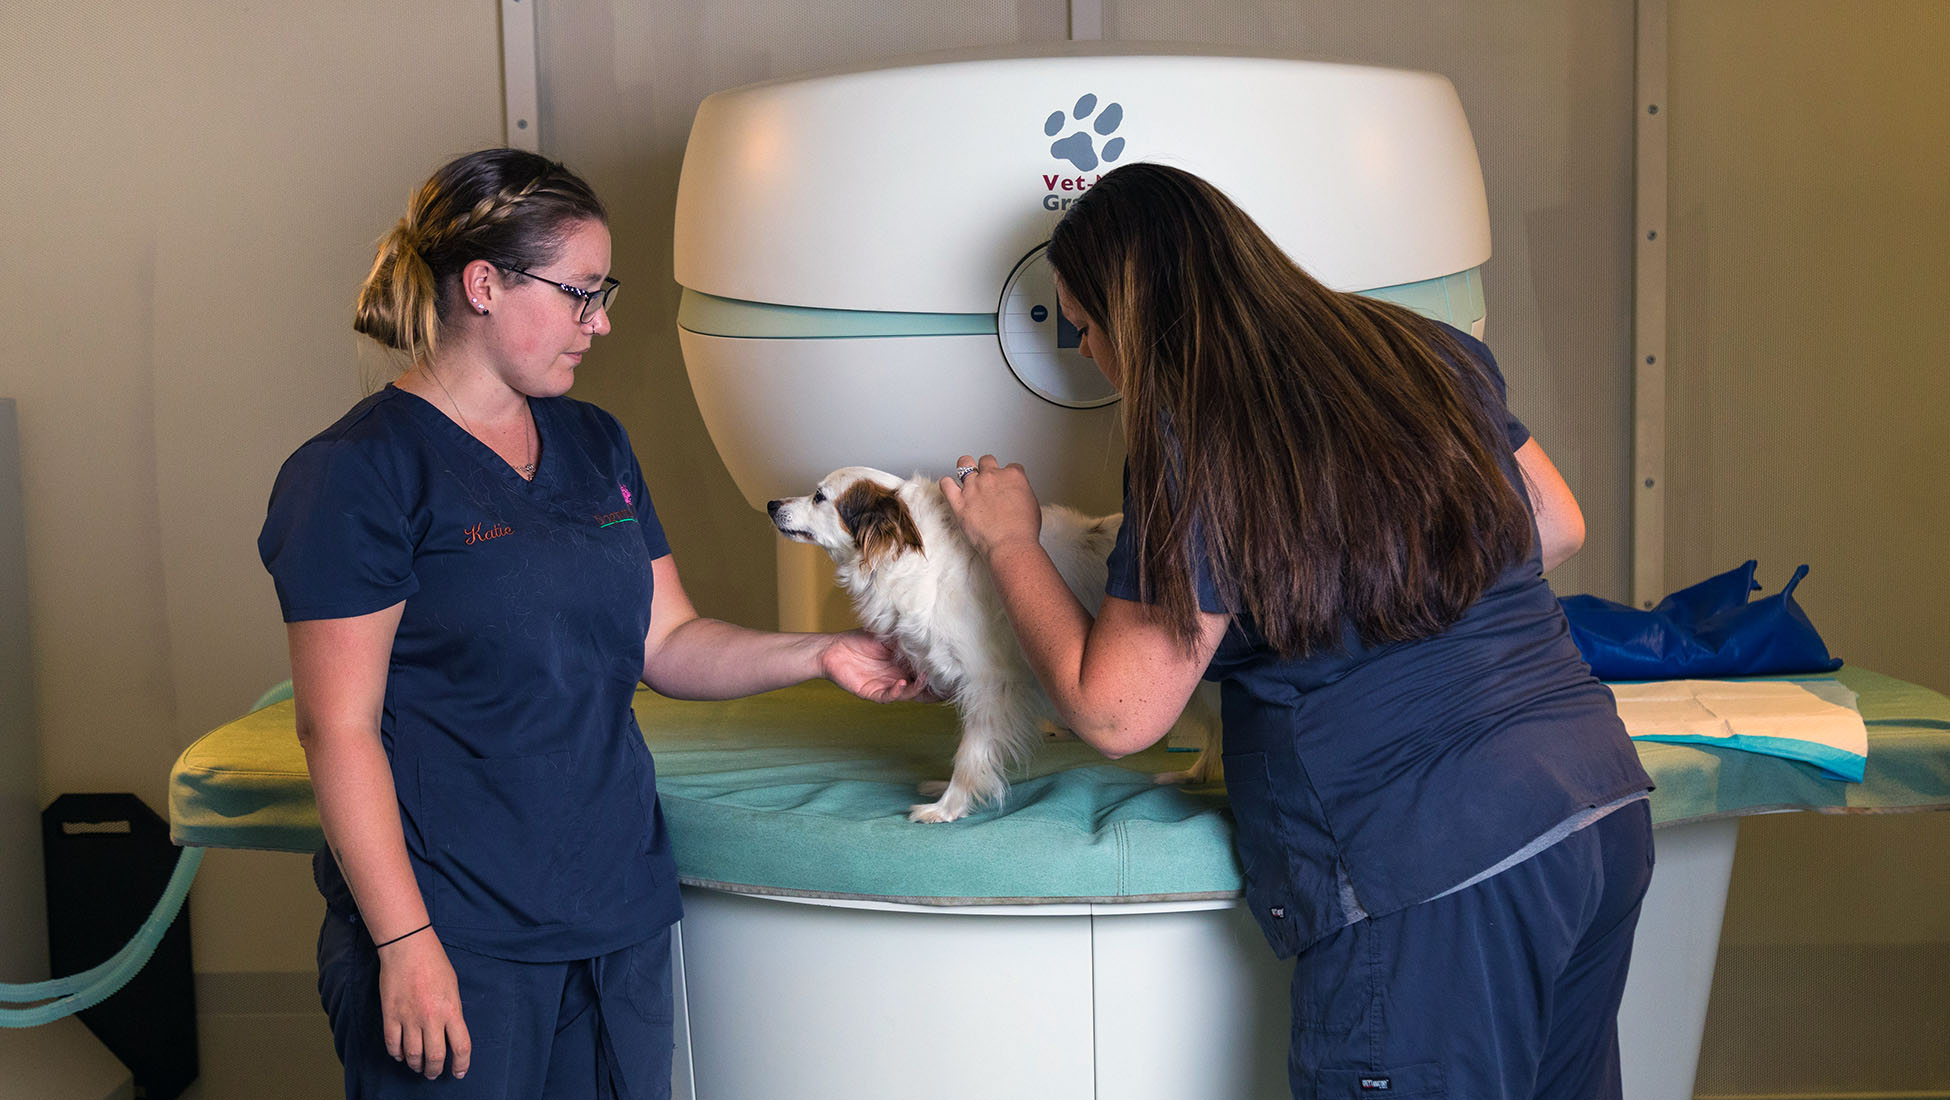 Two vet techs prepare a dog for a diagnostic test.